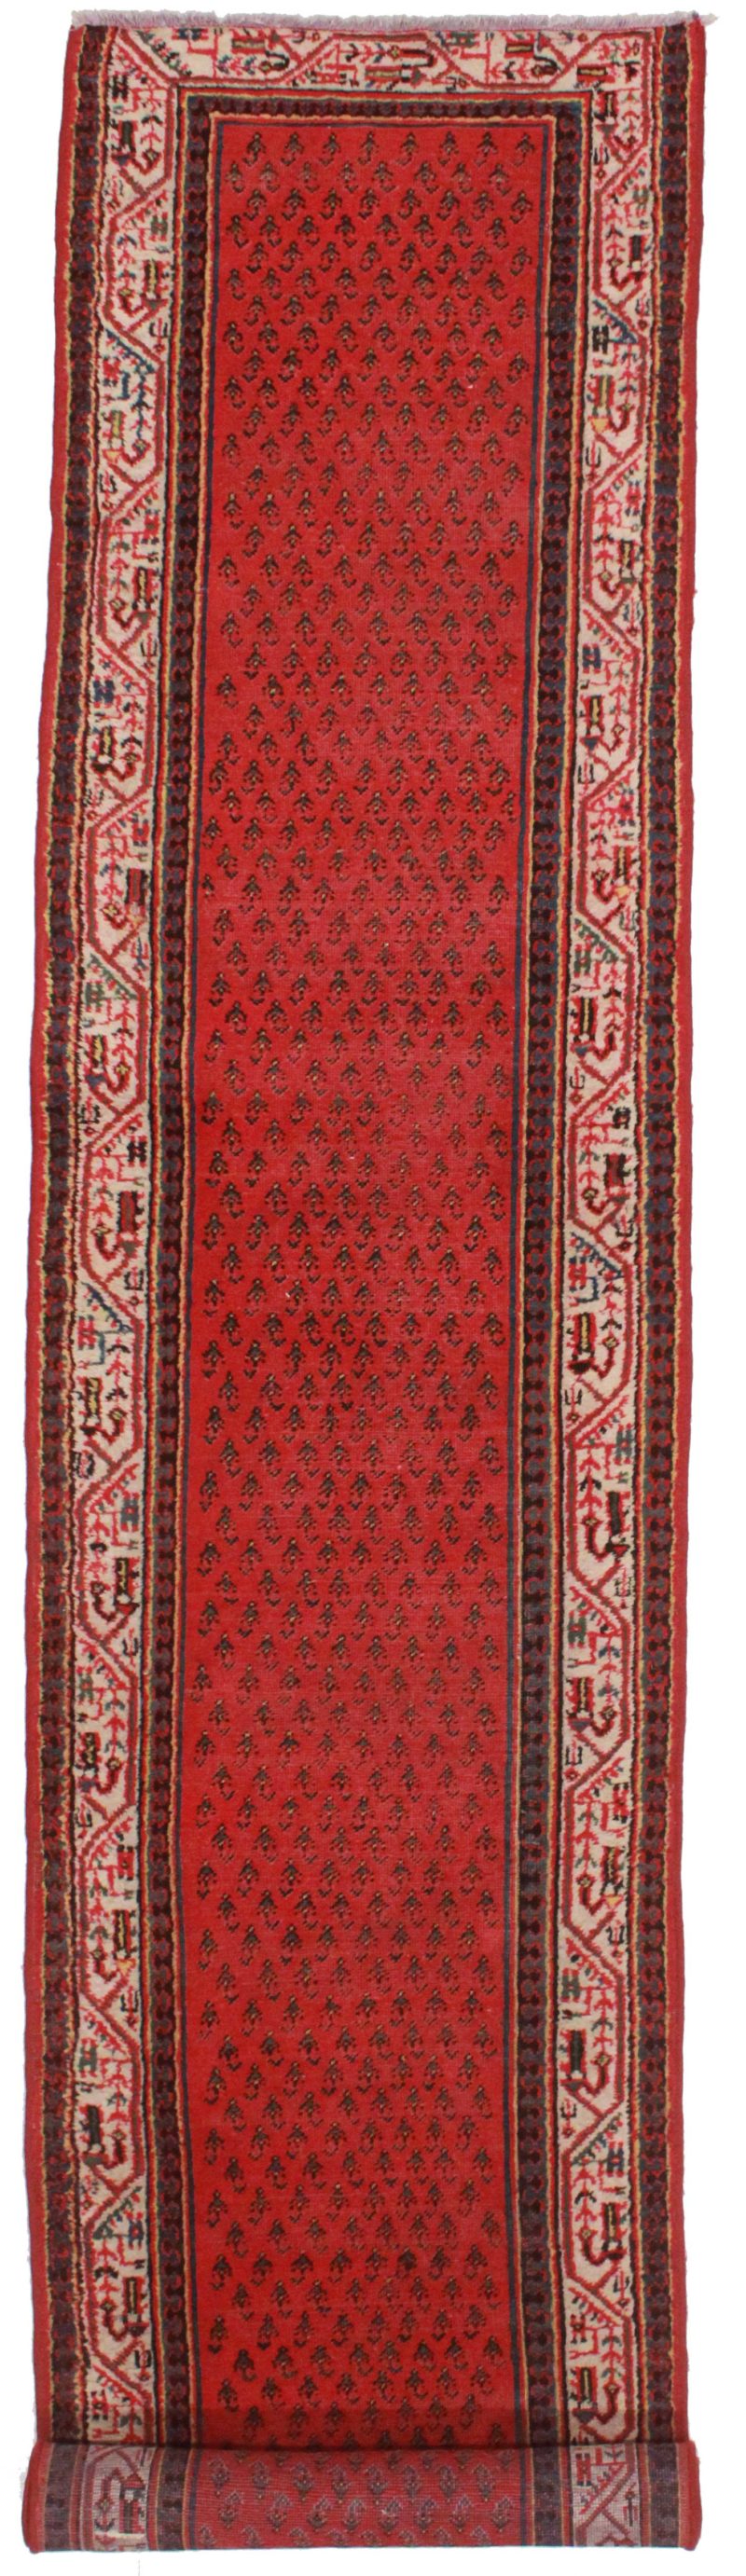 3 x 15 Antique Persian Hamadan Runner 10560